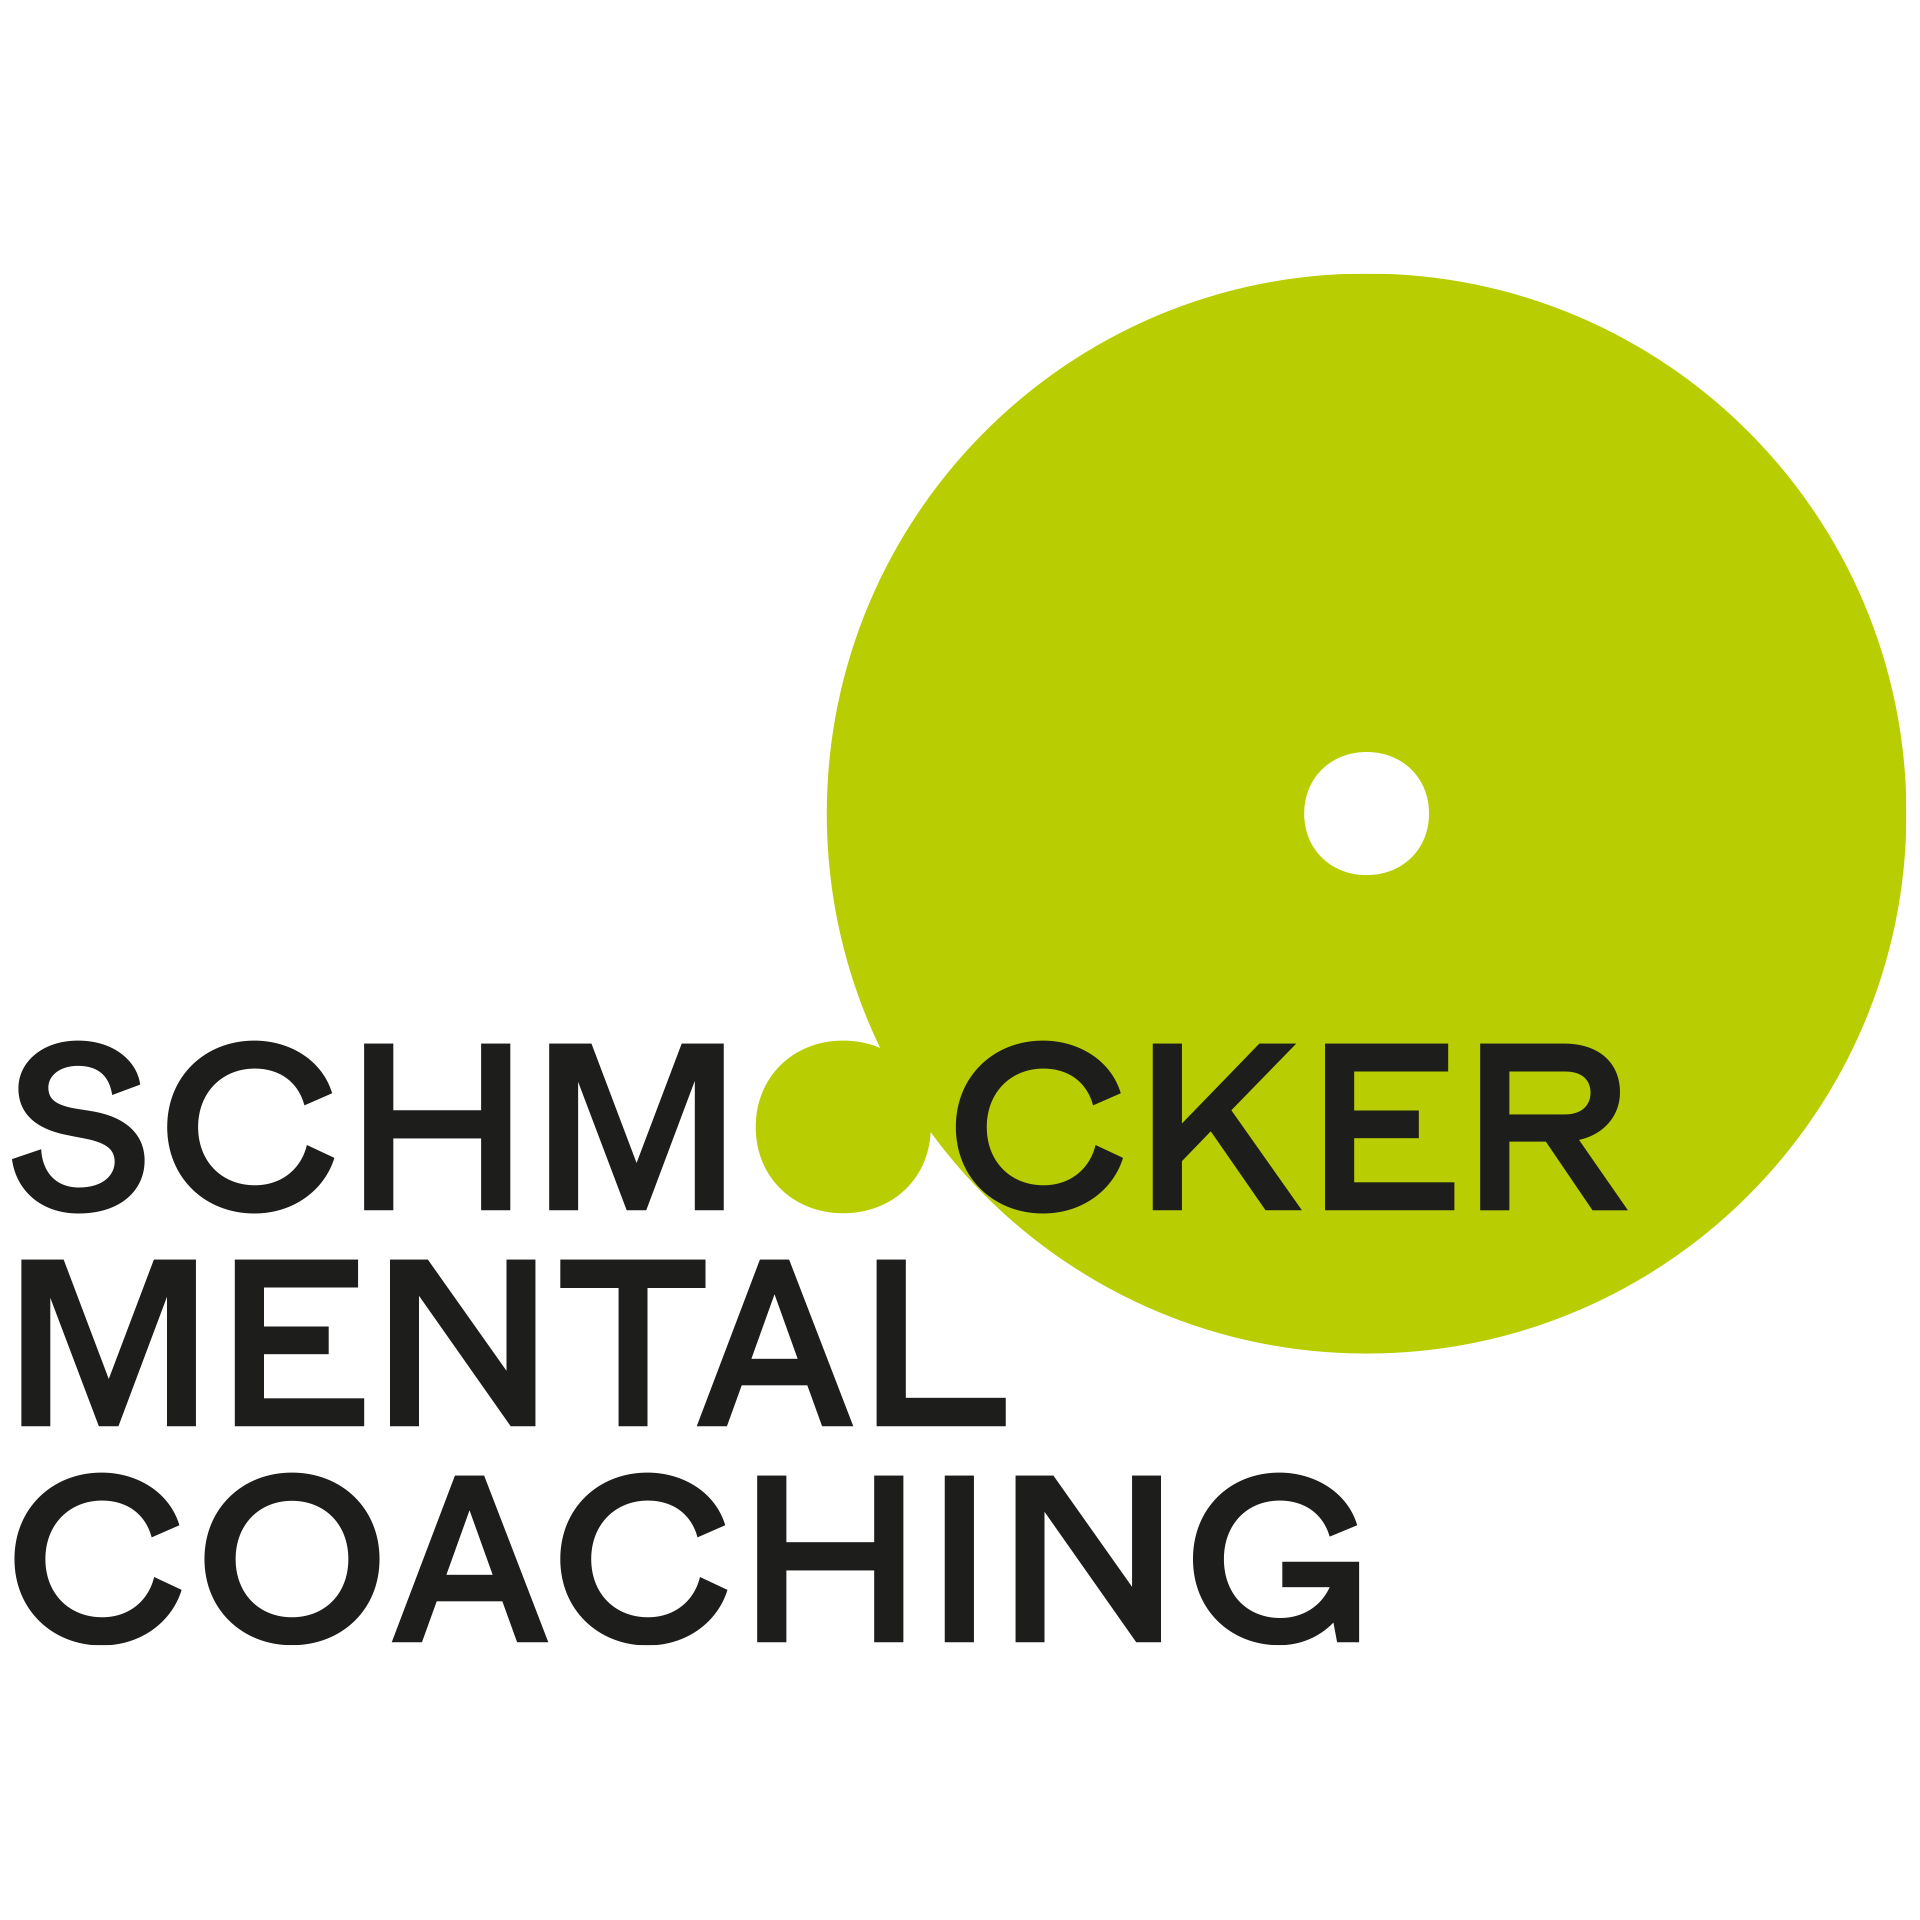 Schmocker Mental Coaching Logo